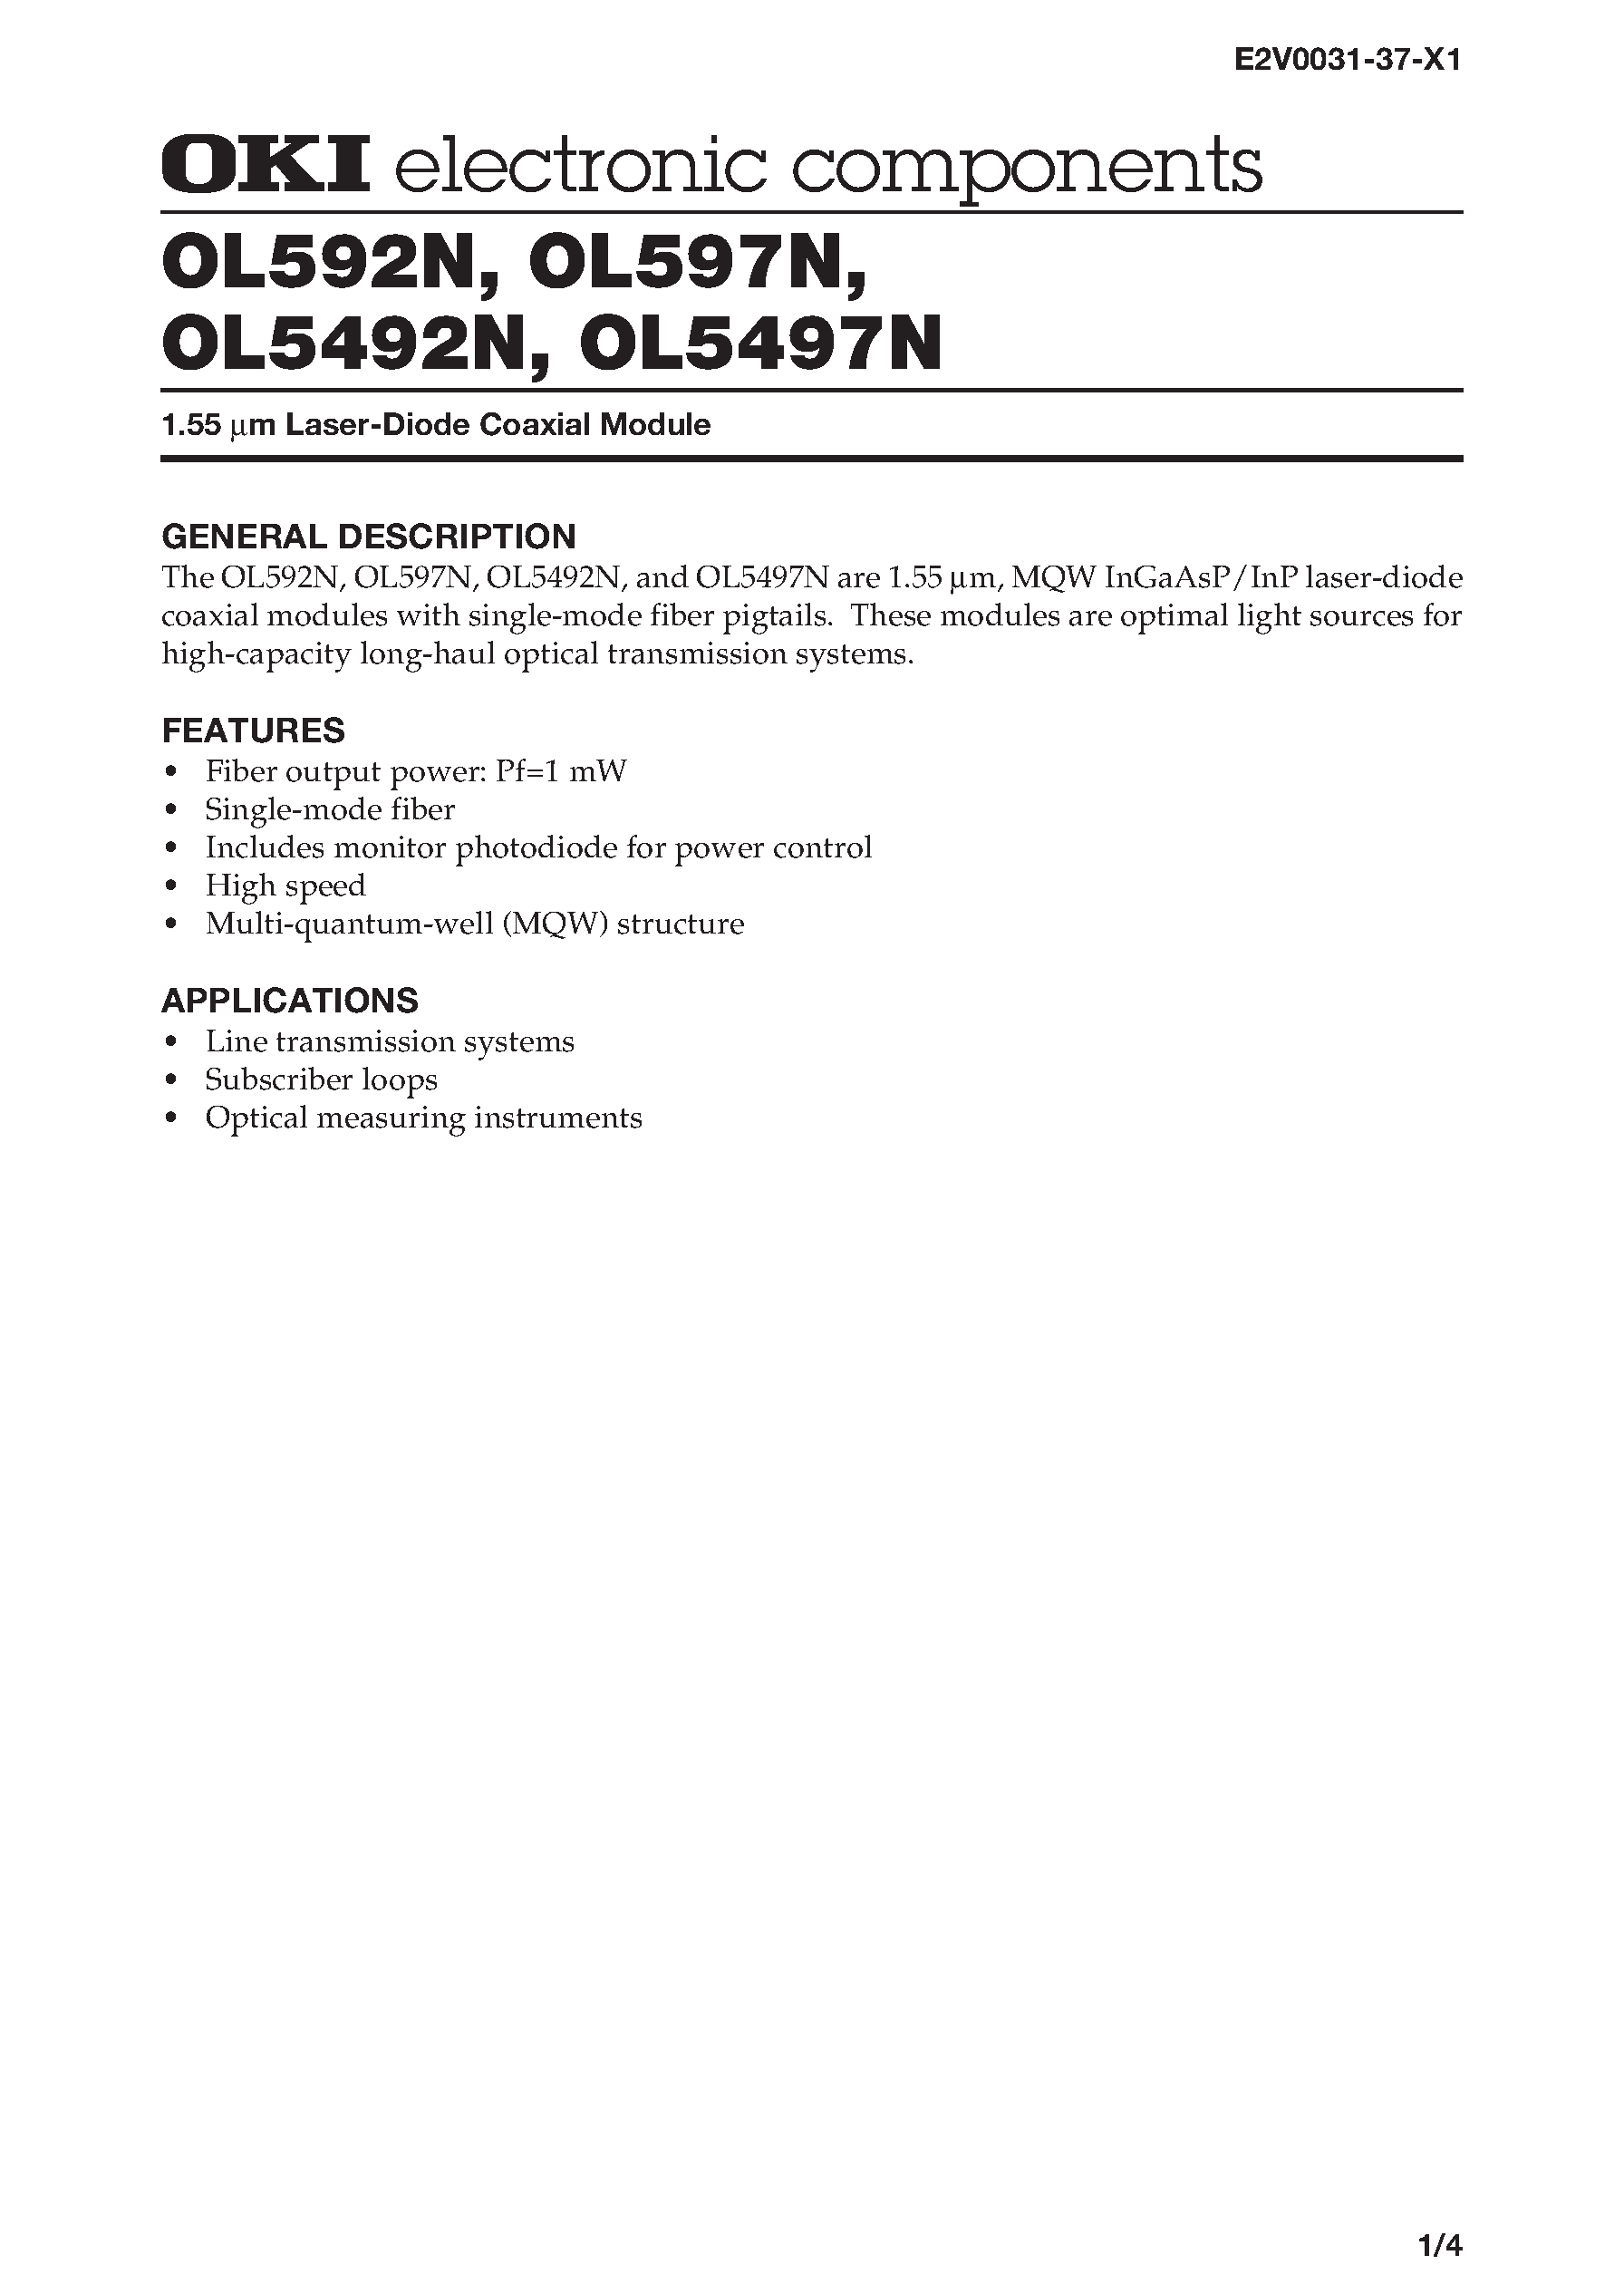 Datasheet OL592N - 1.55 m Laser-Diode Coaxial Module page 1